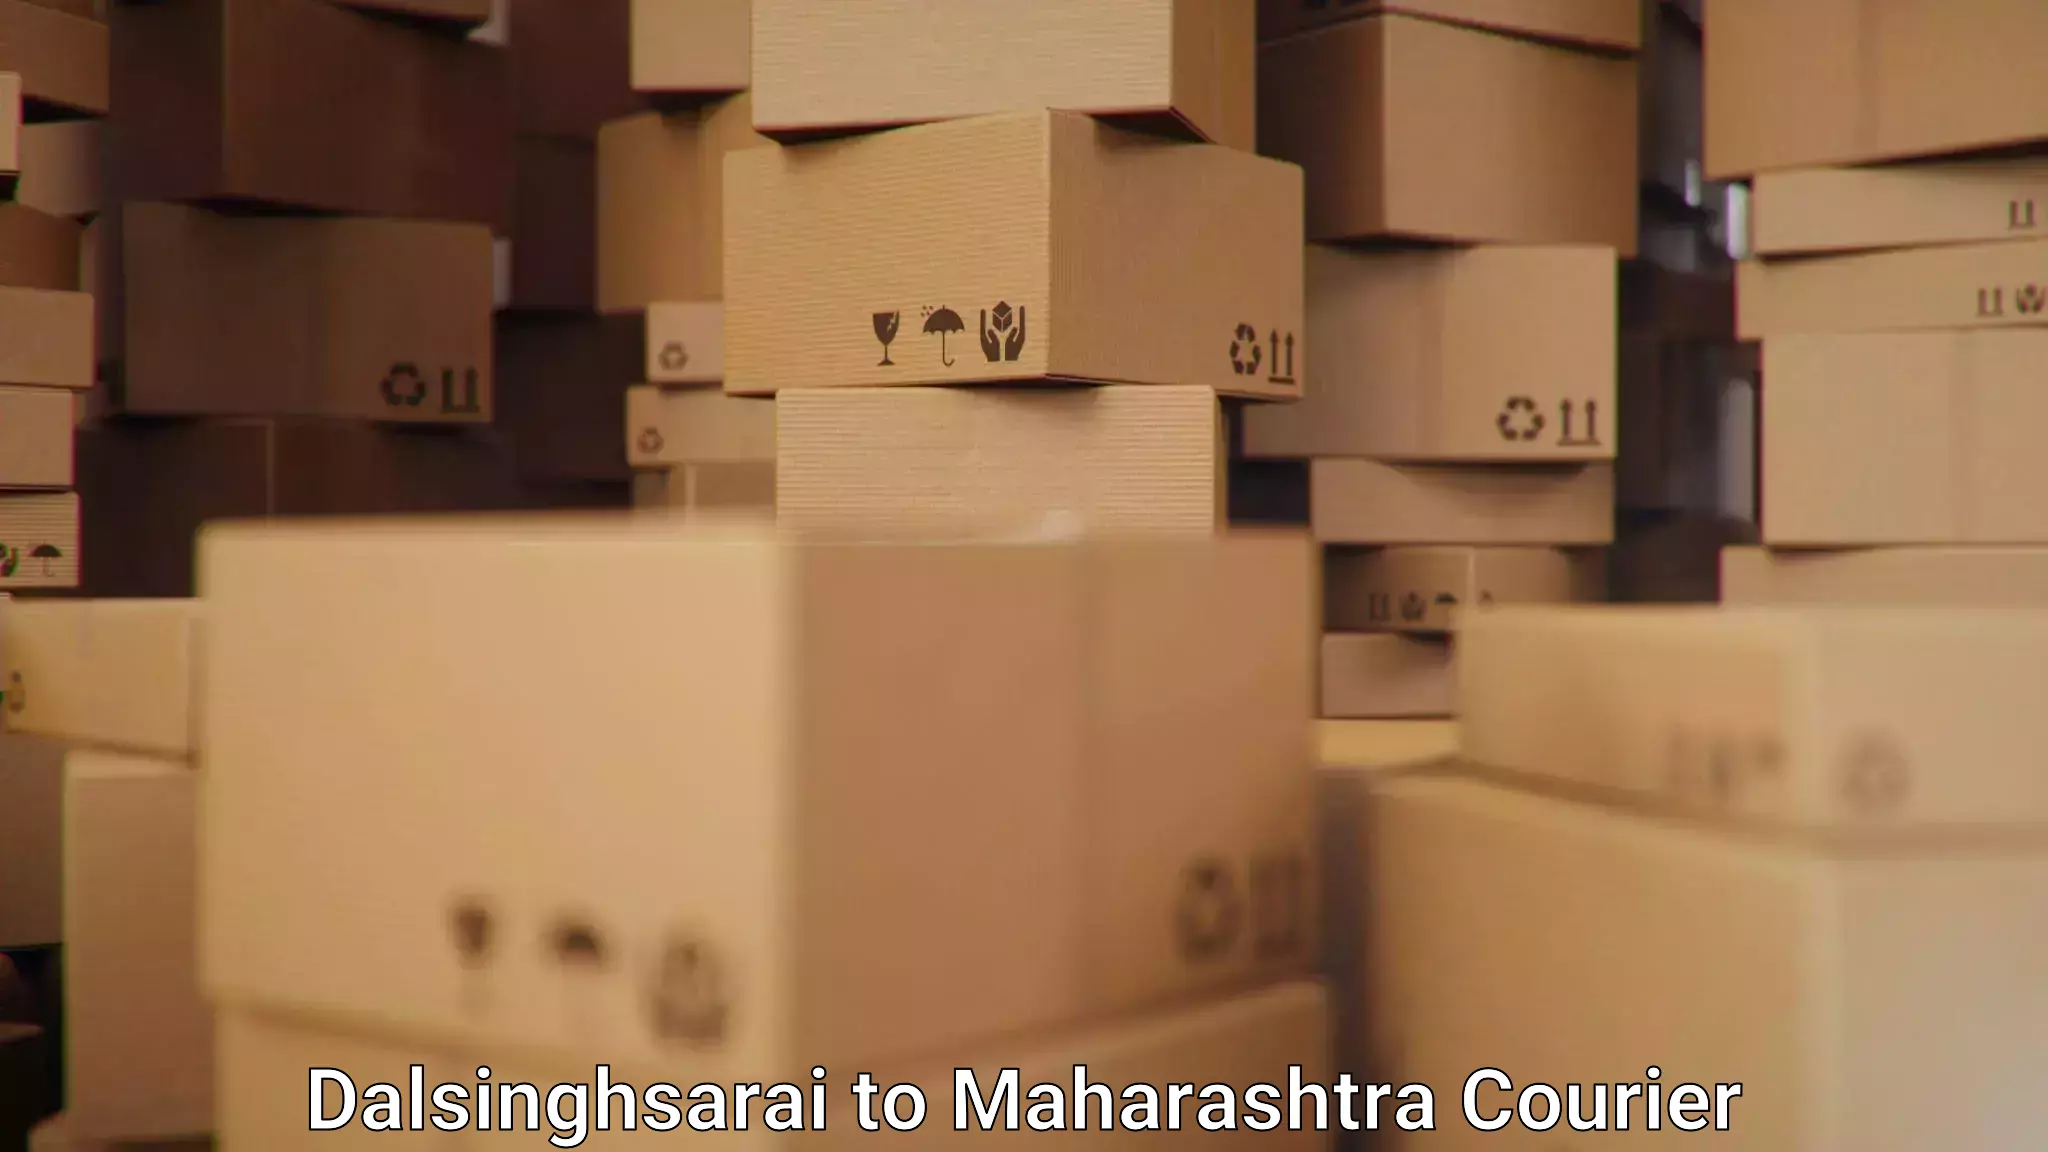 Bulk shipping discounts Dalsinghsarai to Maharashtra